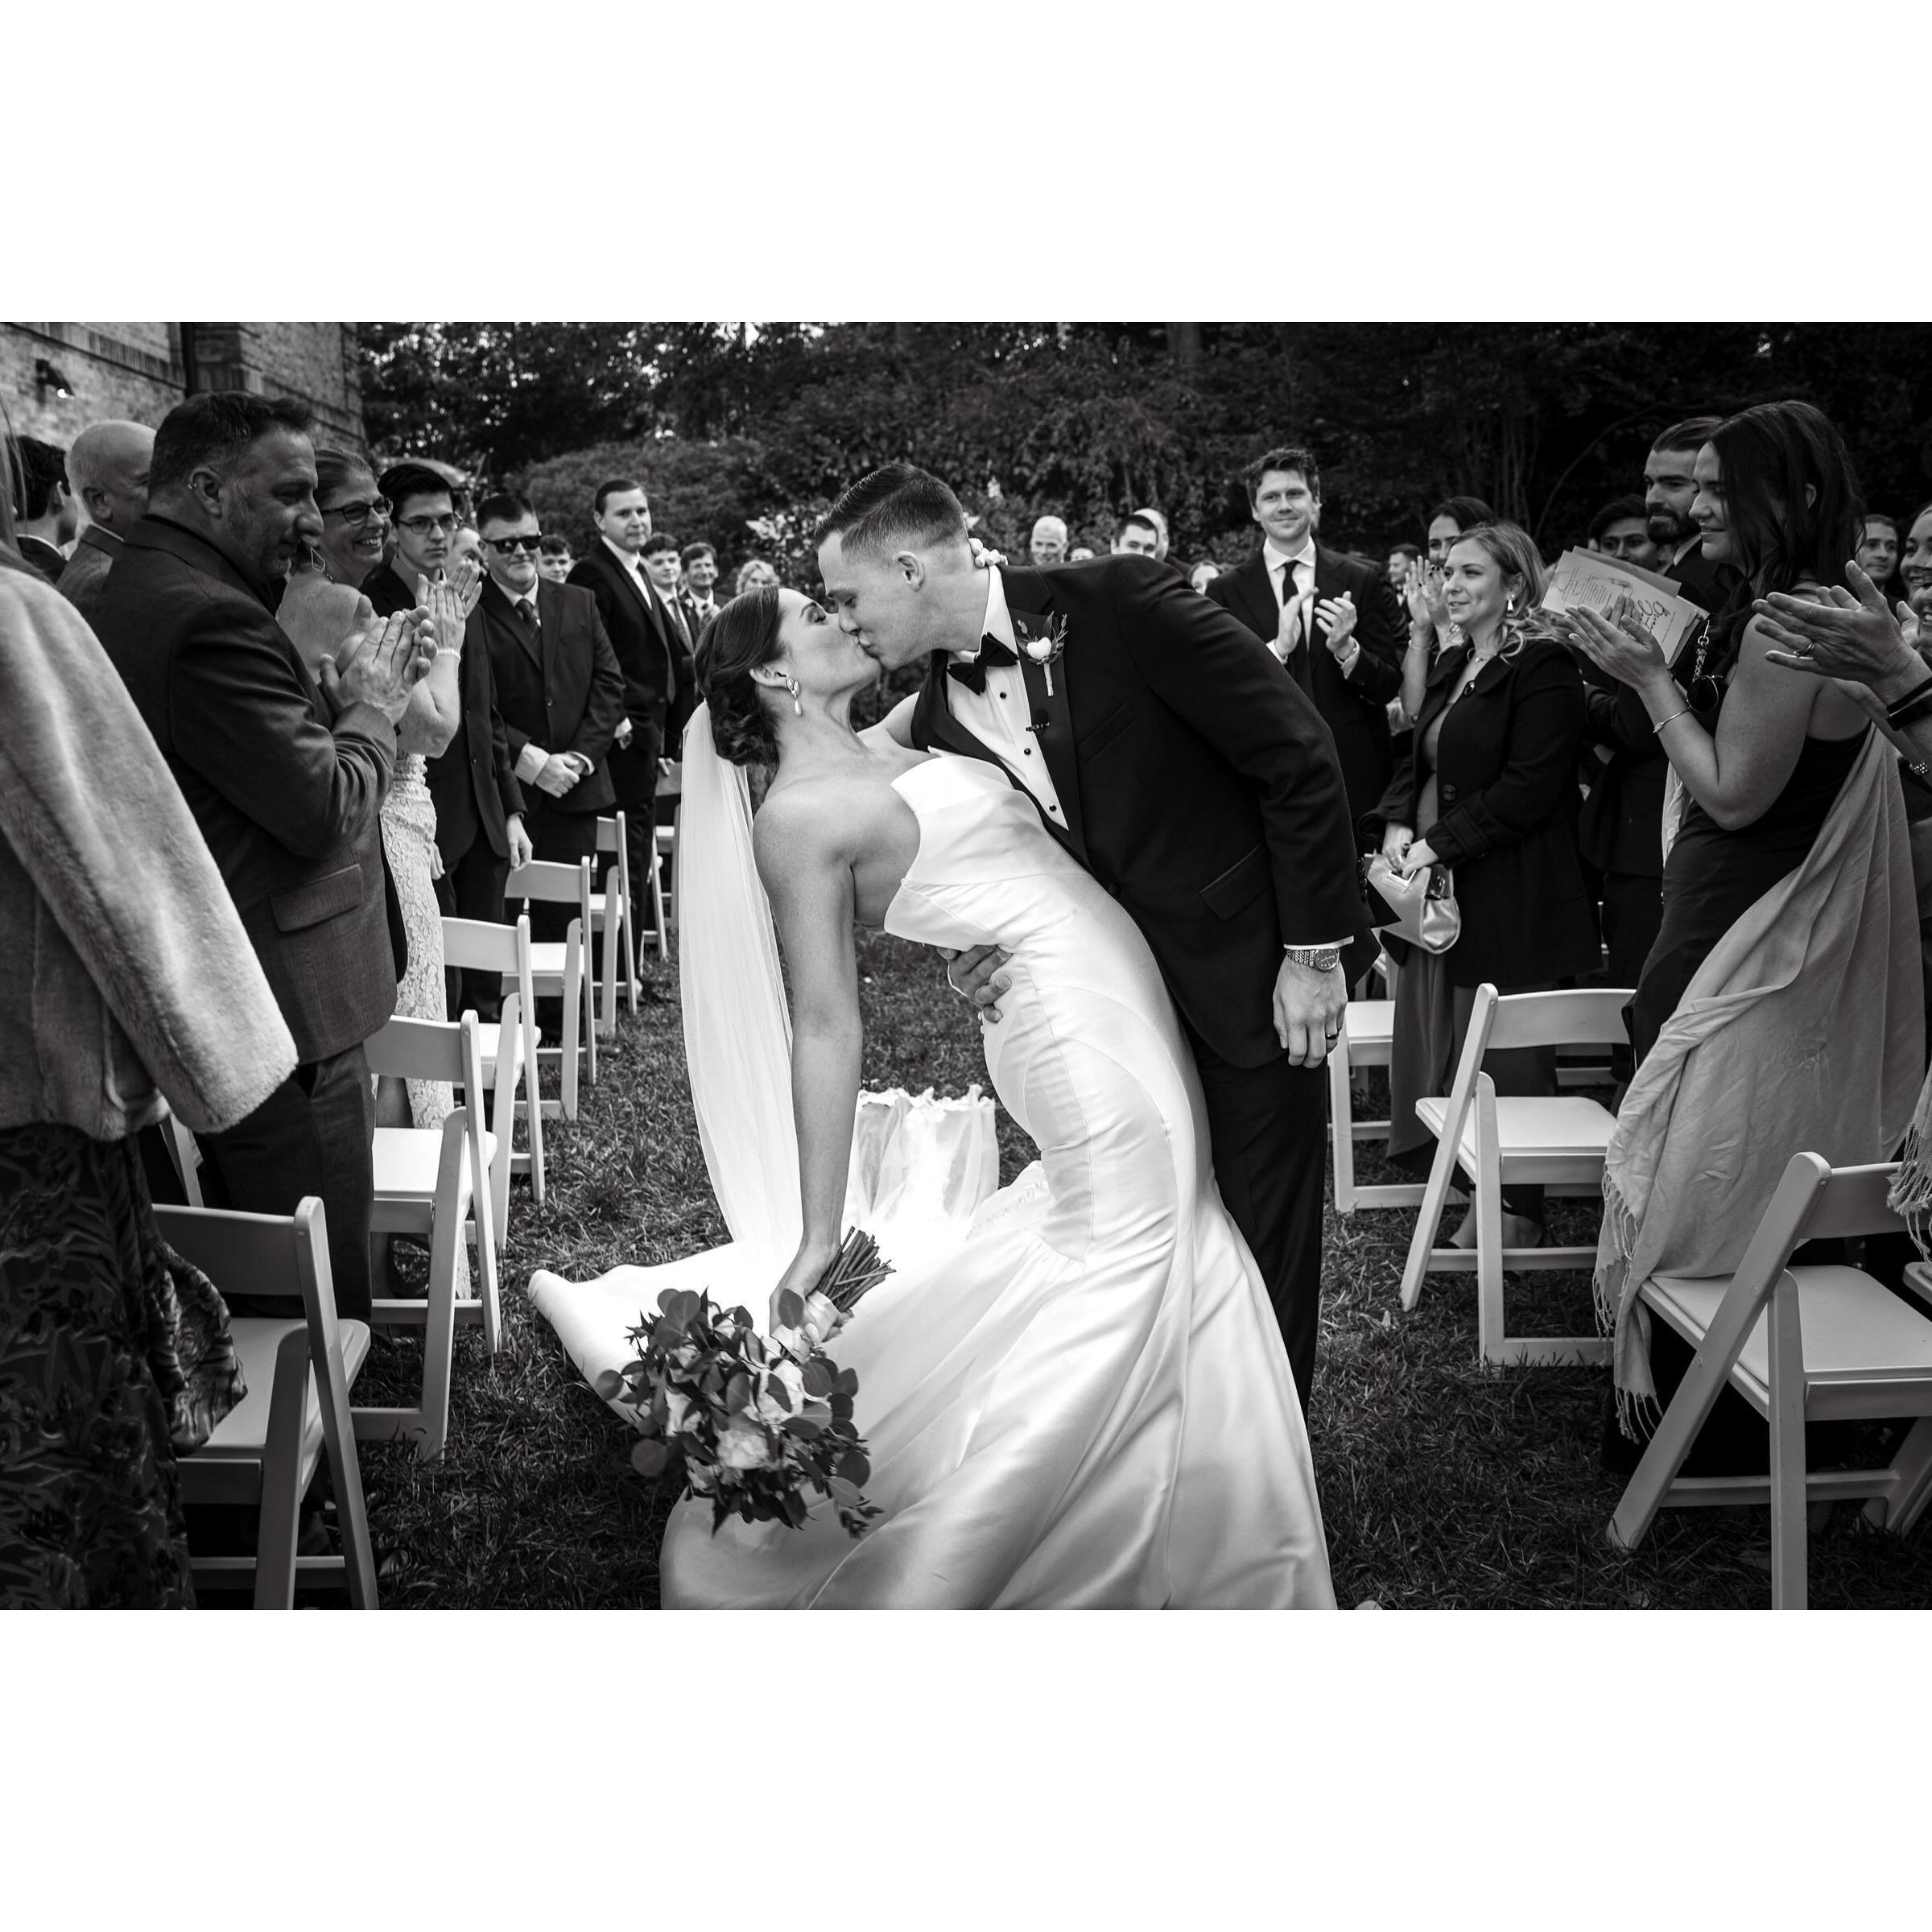 You May Now Kiss The Bride 💋

#firstkiss #loveandhappiness #thestoryweddings #destinationweddingphotographer #dcweddingphotography